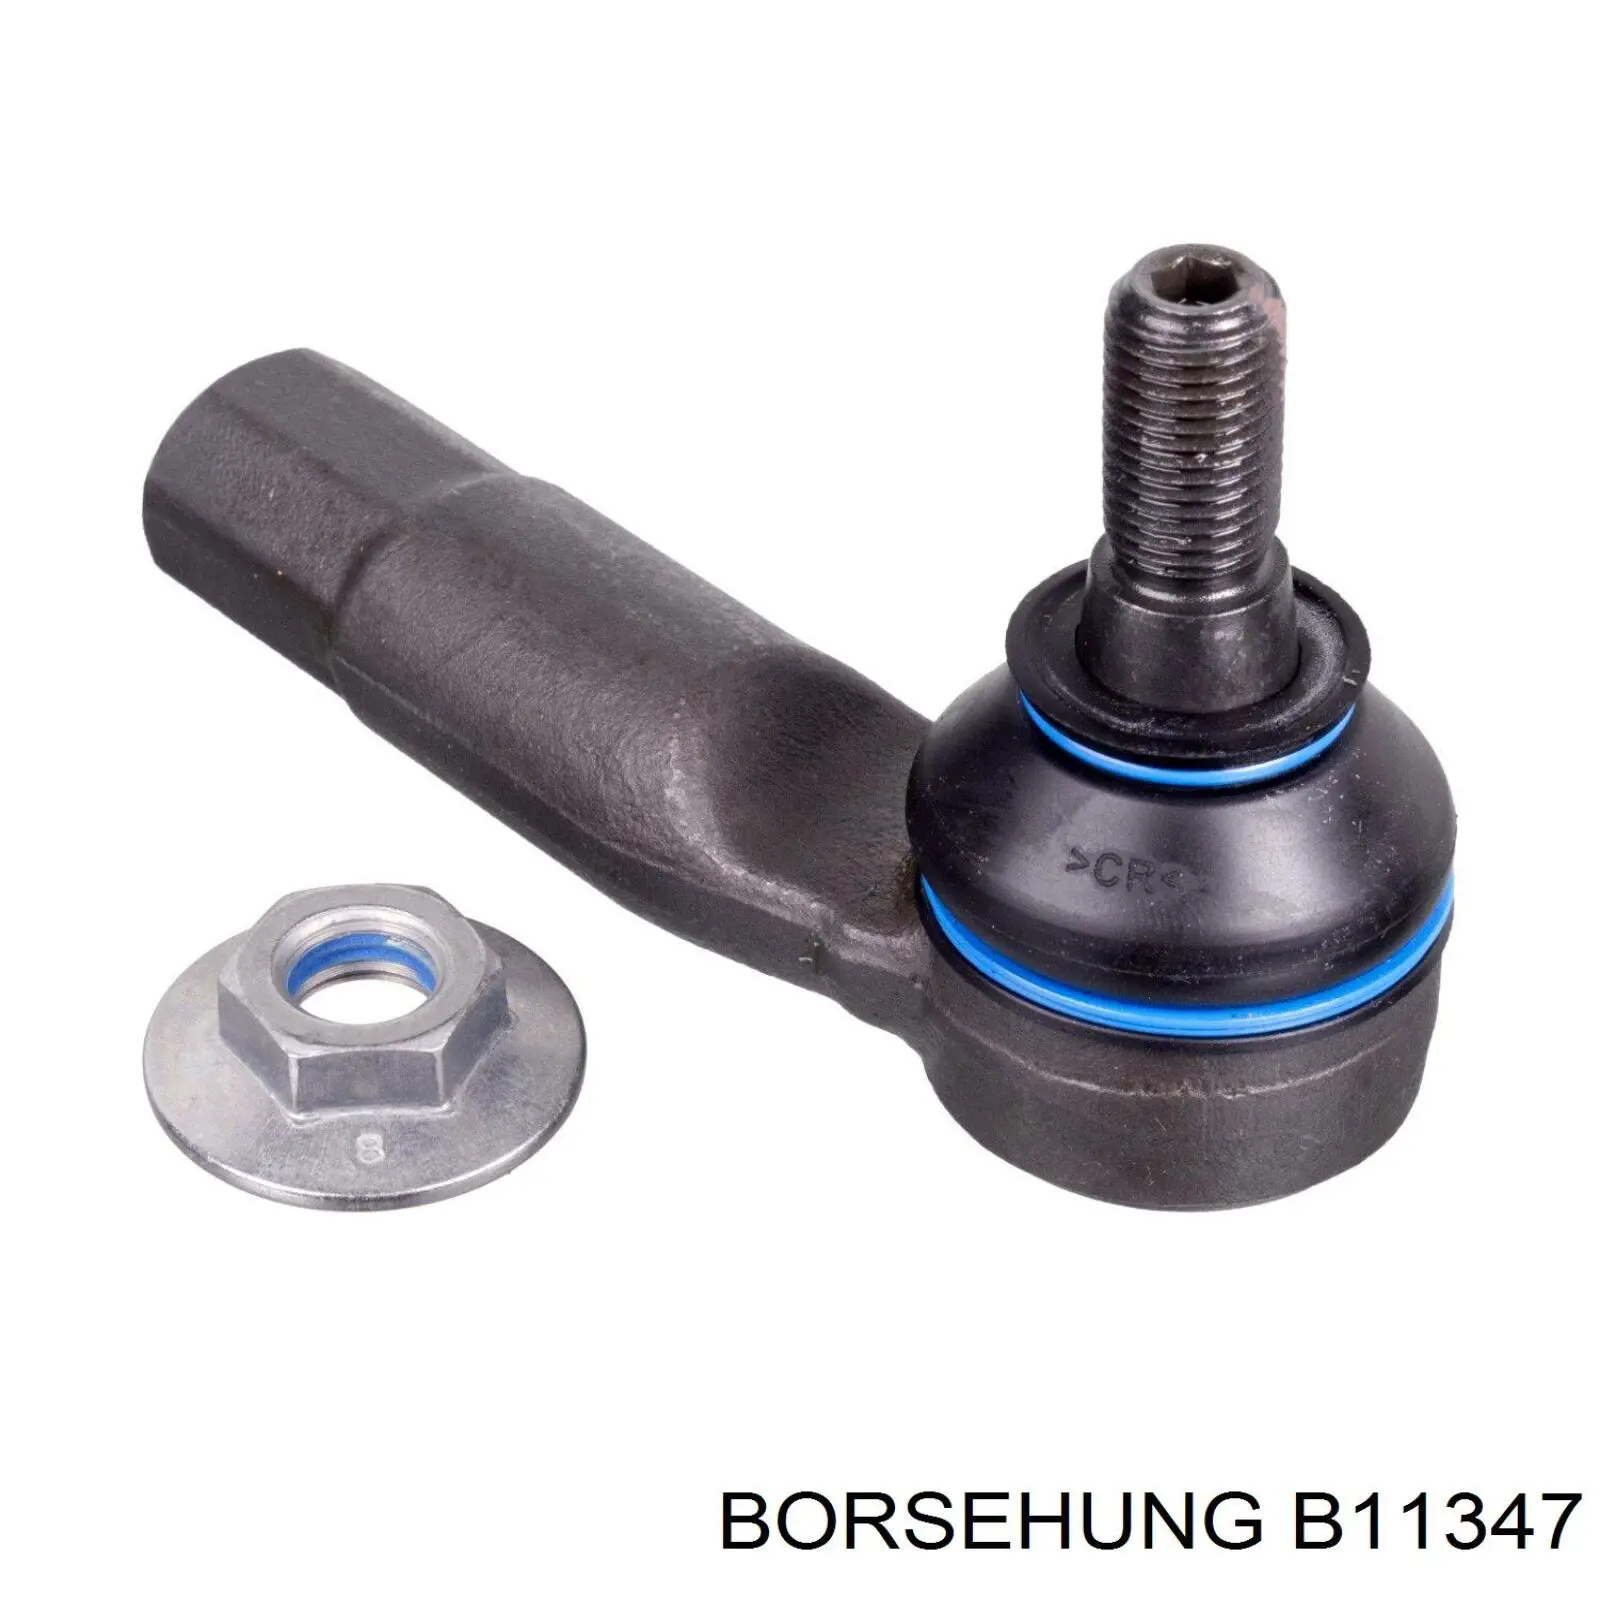 B11347 Borsehung rótula barra de acoplamiento exterior